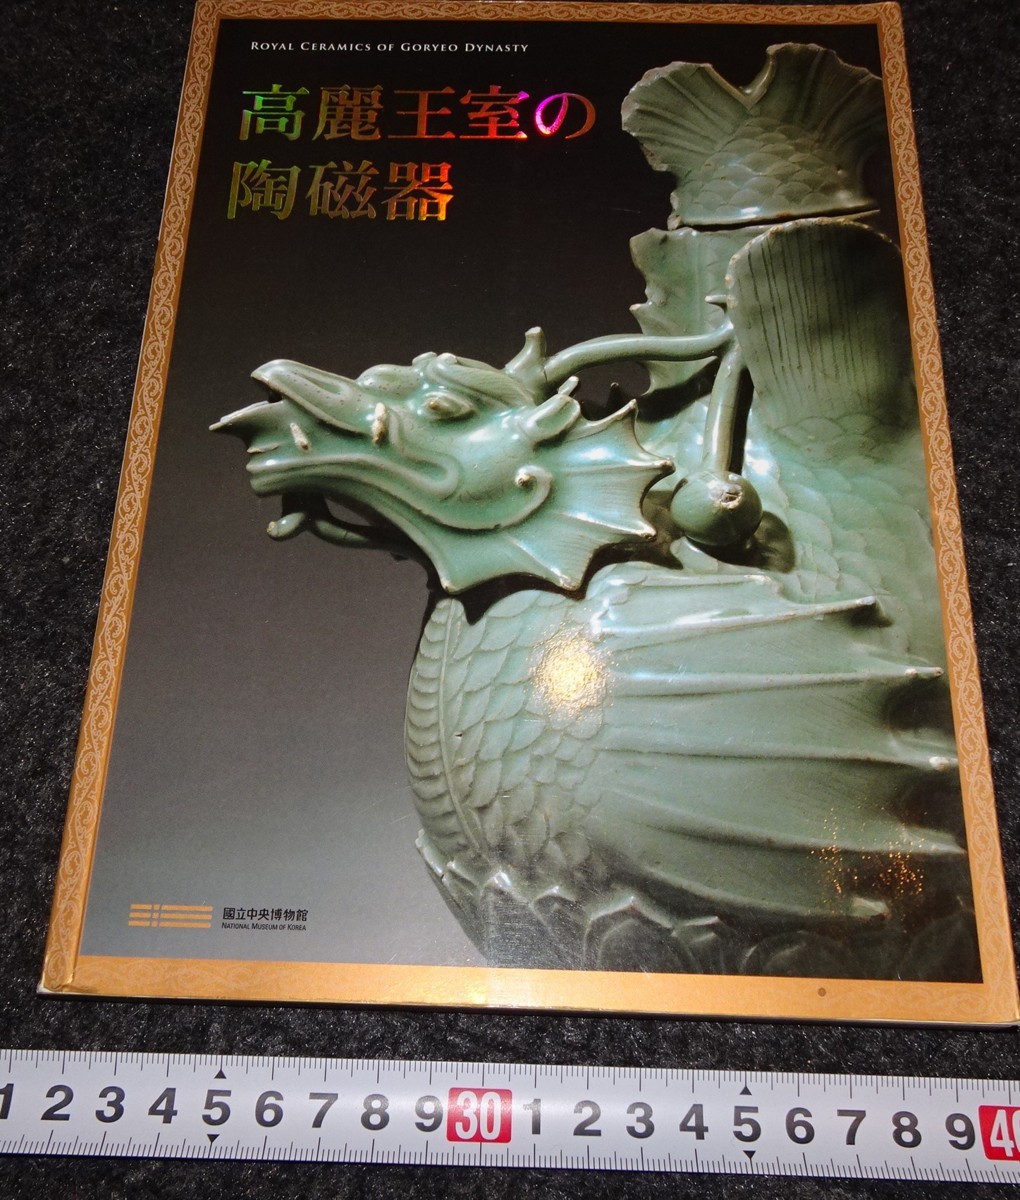 代引可】 rarebookkyoto s789 朝鮮 高麗皇室の陶磁器 青磁 2009年 李朝